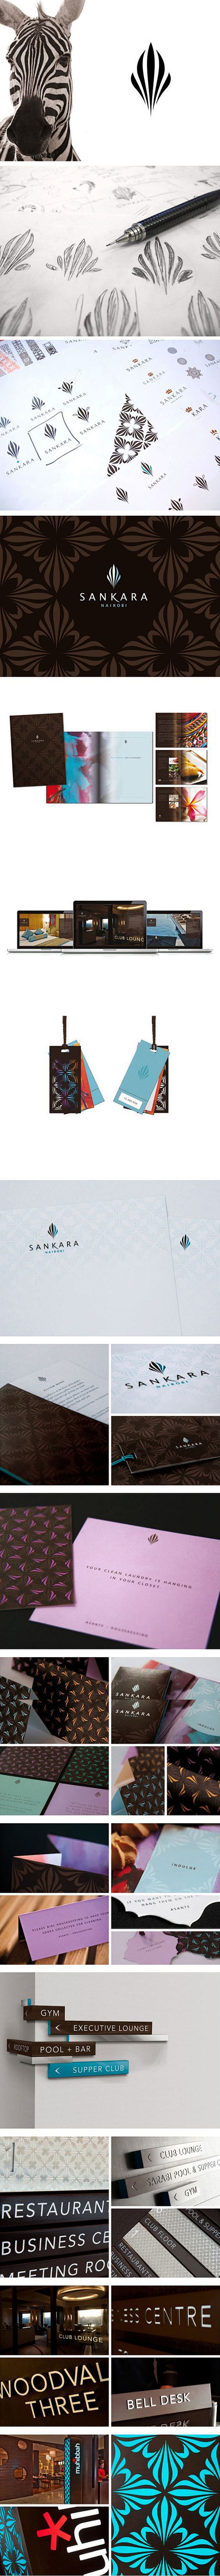 Sankara Hotel image ...